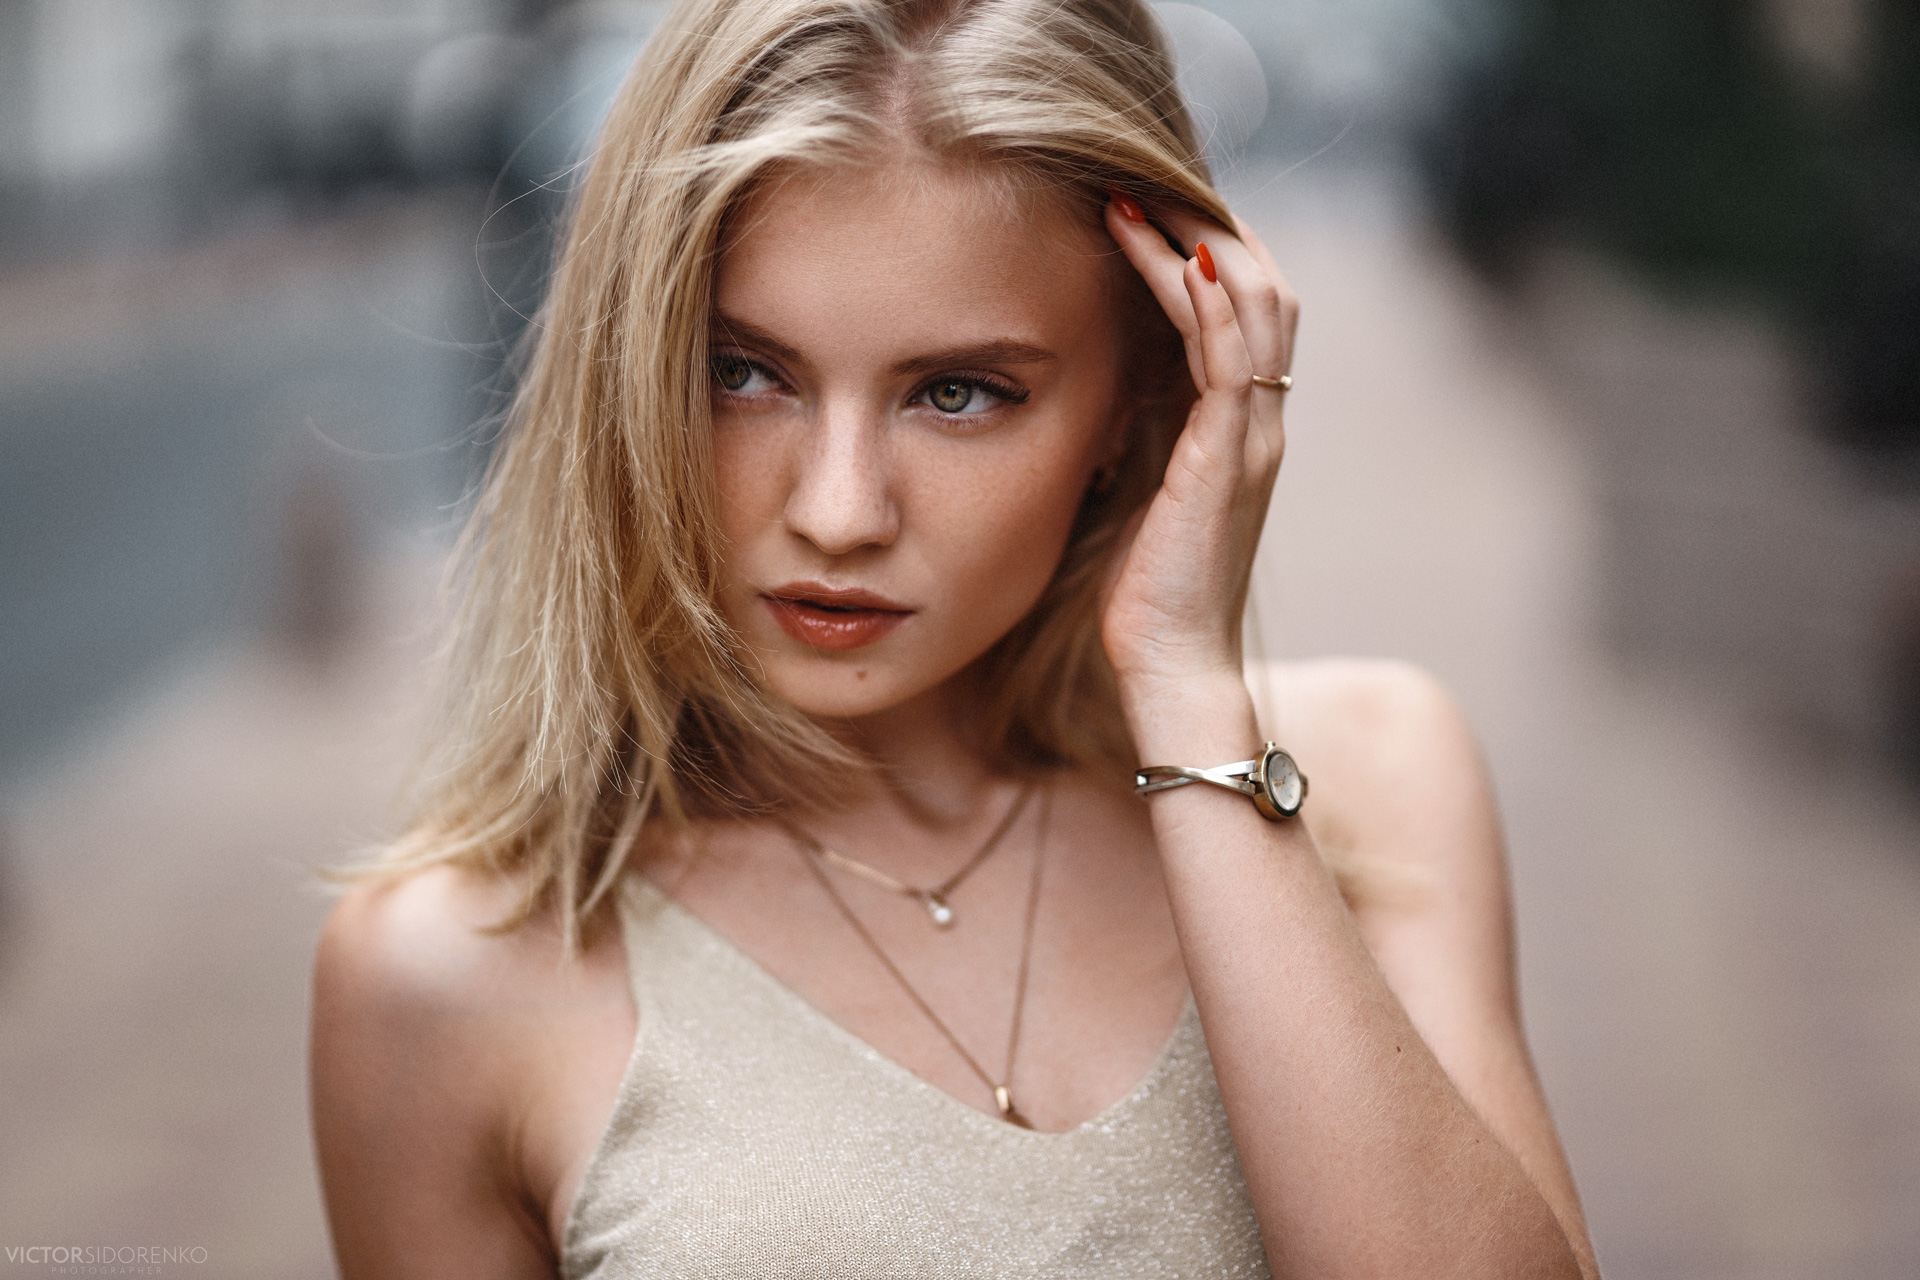 Katrin Enina Victor Sidorenko Women Model Blonde Touching Hair Bokeh Outdoors Tank Top Necklace Look 1920x1280